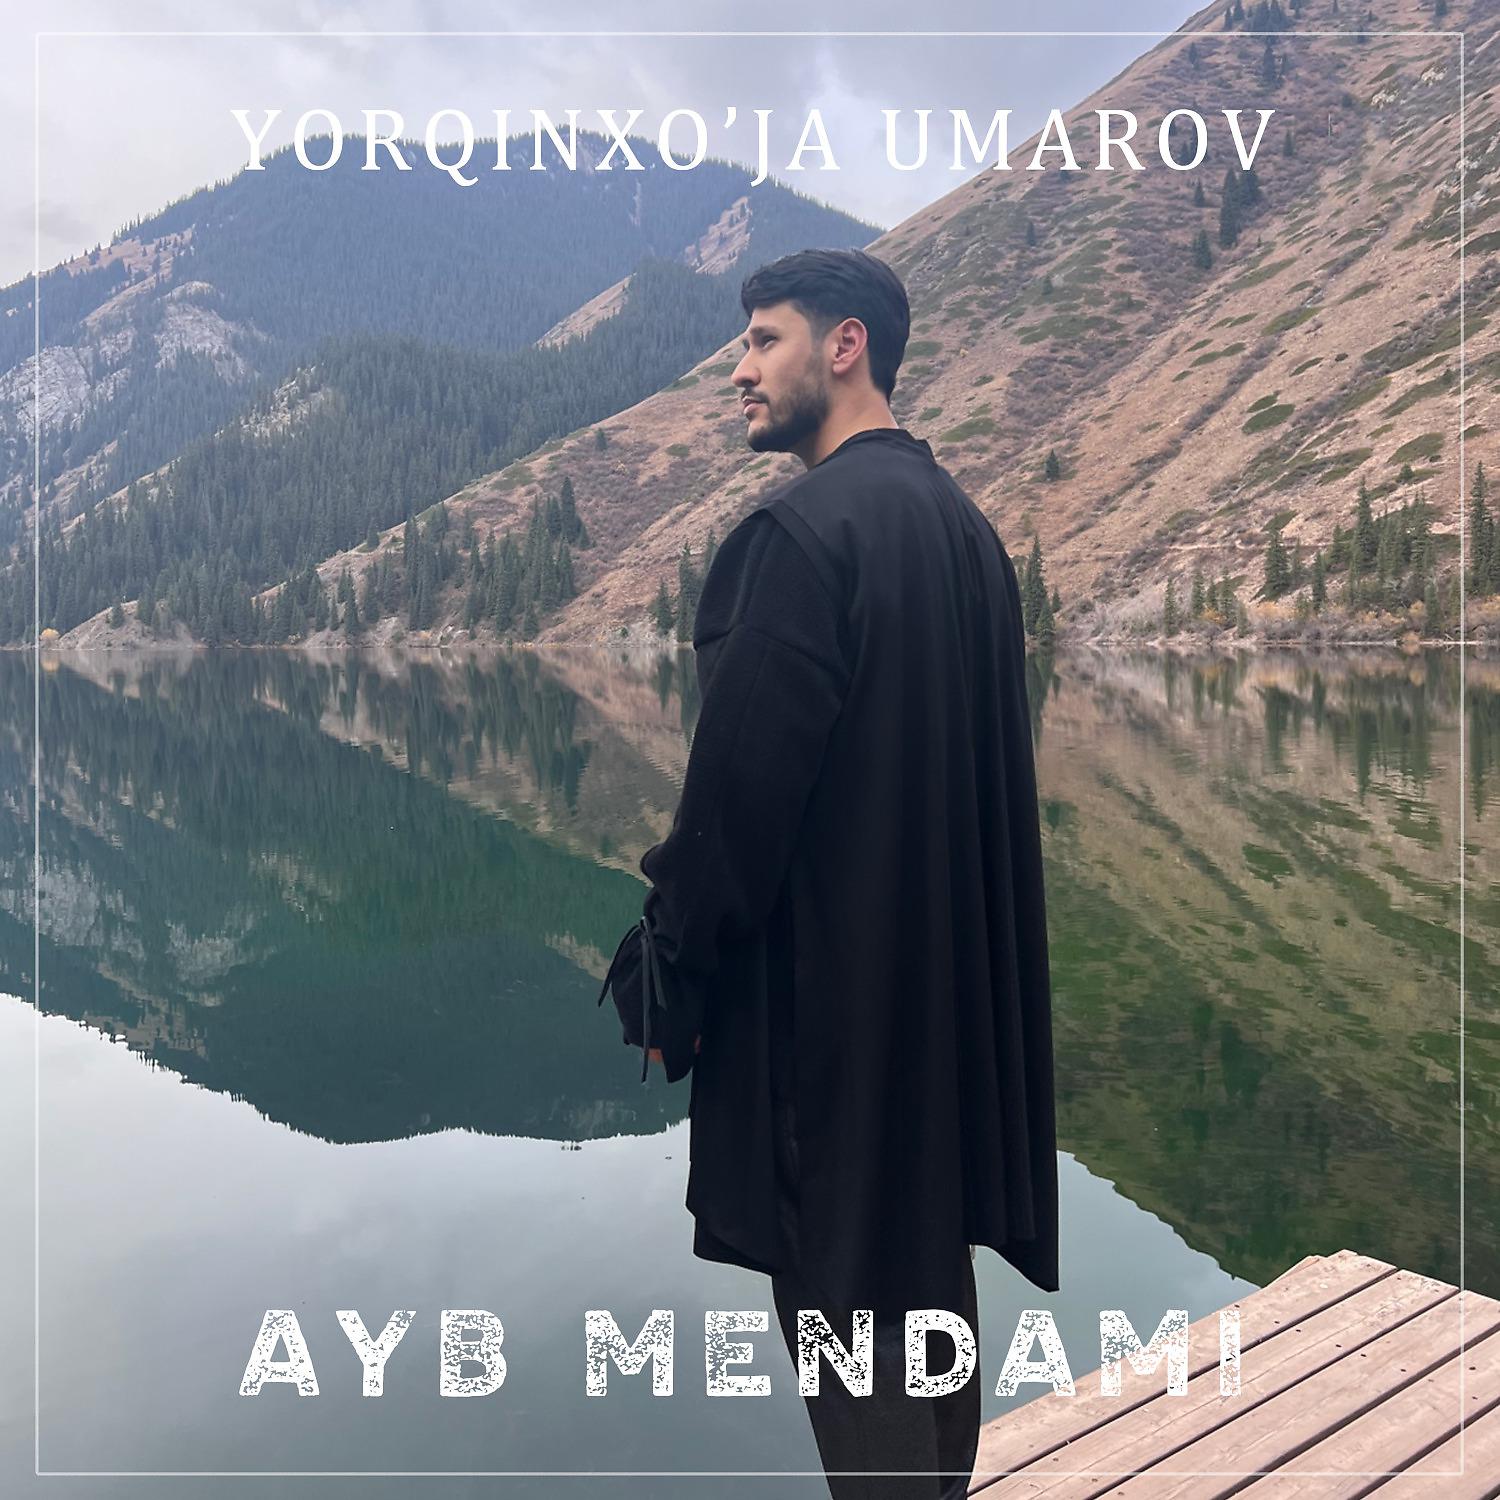 Постер альбома Ayb Mendami